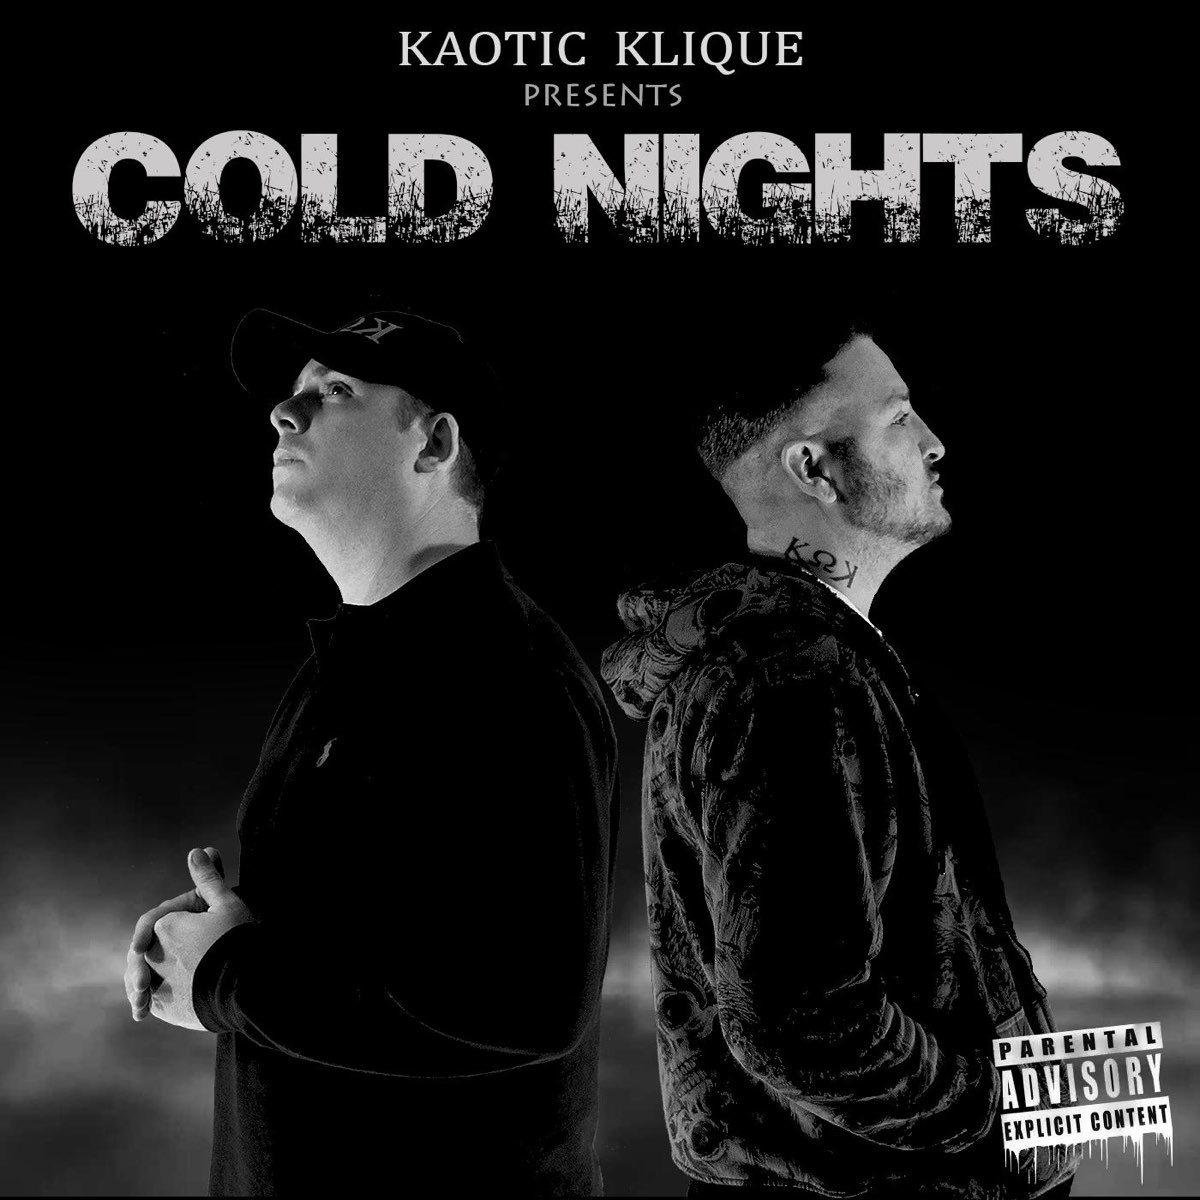 Kaotic Klique. Kaotic. Kaotic Klique face. On this Cold Cold Night.